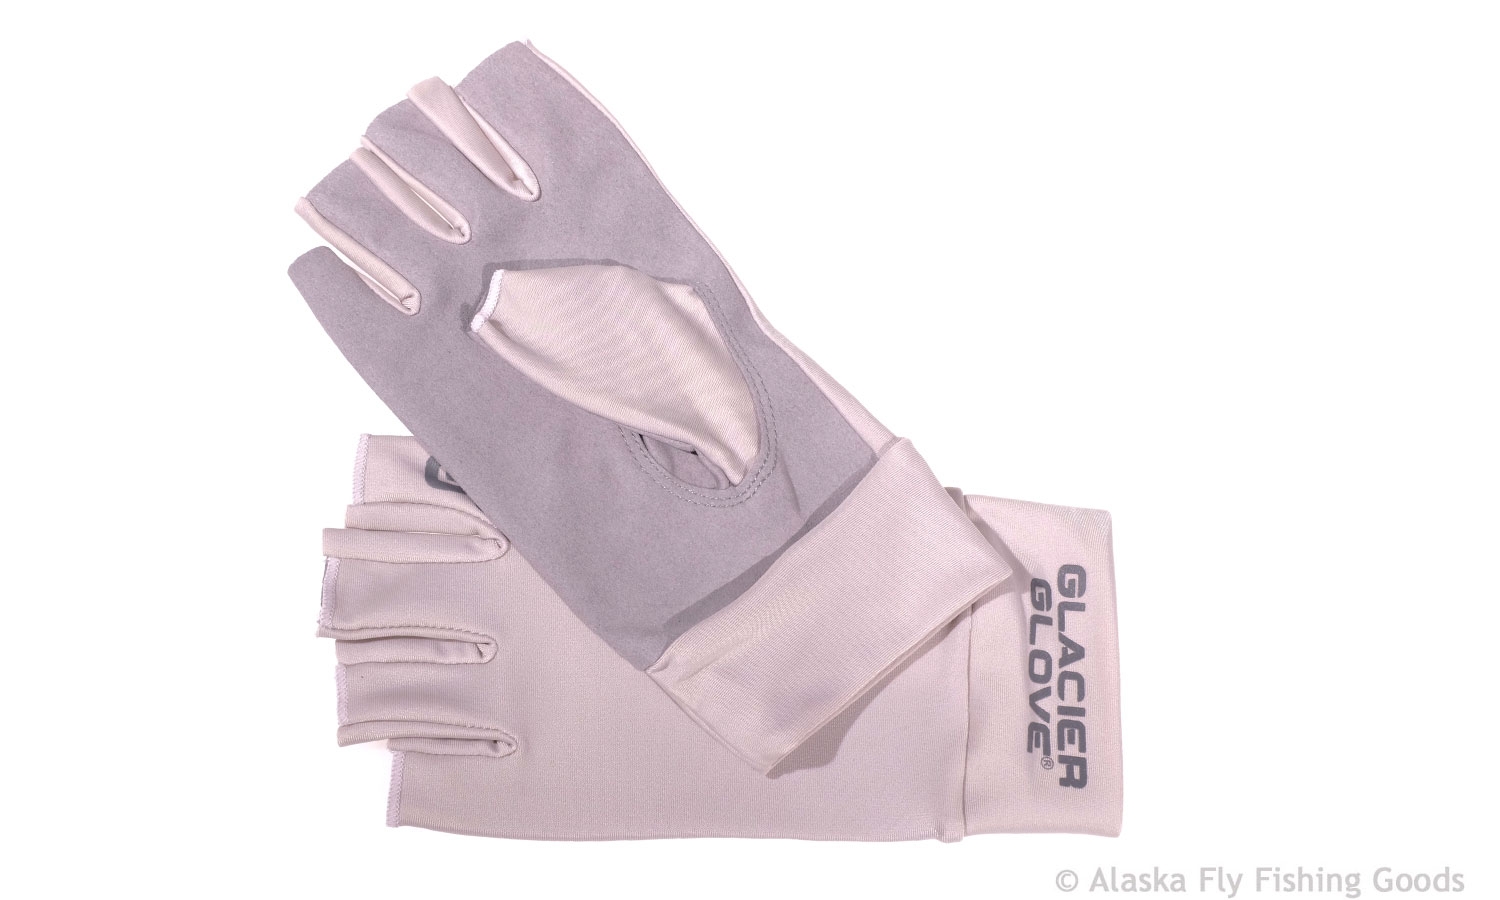 Gloves, Socks & Accessories - Jacket & Insulation - Alaska Fly Fishing Goods